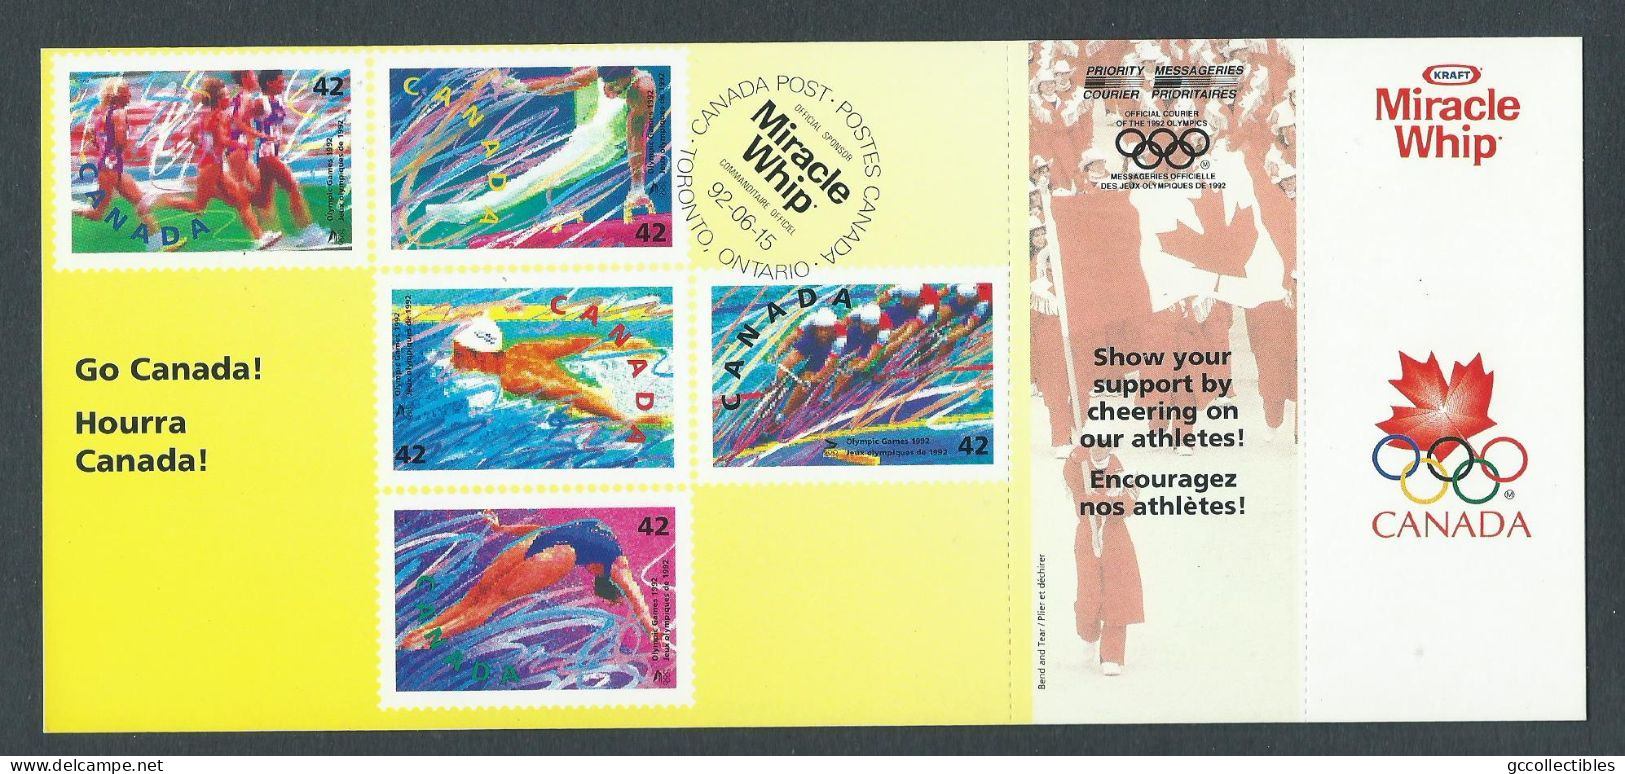 Canada-Post Miracle Whip Post Card Uncirculated - Summer Olympics 1992 - Cartoline Illustrate Ufficiali (della Posta)